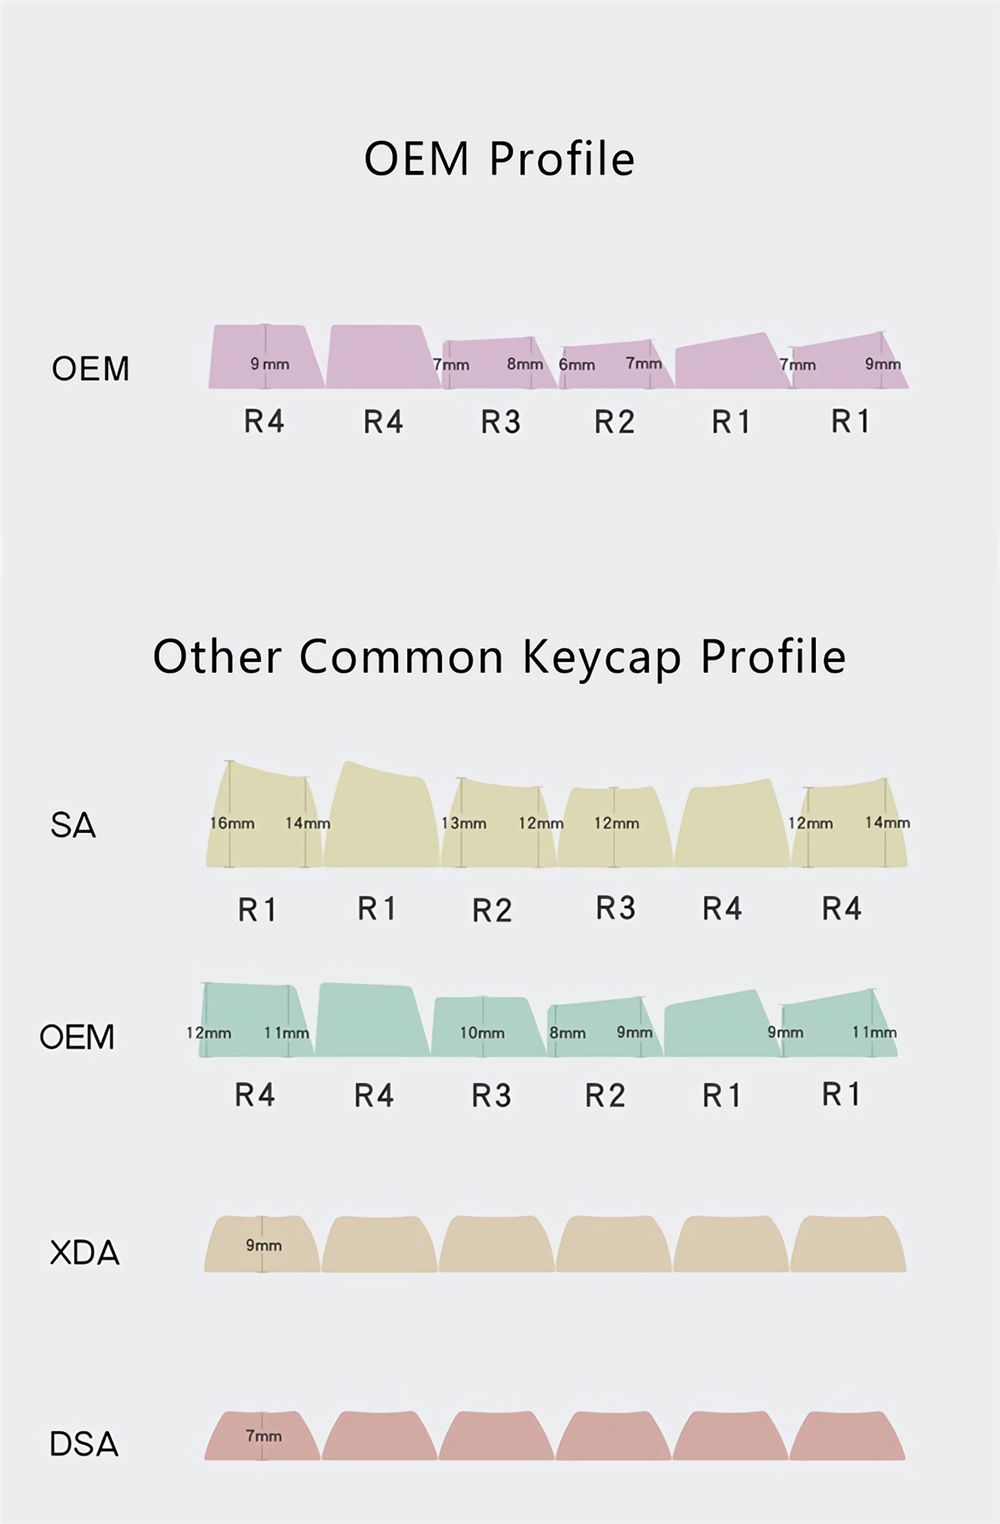 MechZone-108-Keys-Blue-Yellow-Keycap-Set-OEM-Profile-PBT-Keycaps-for-616887104108-Keys-Mechanical-Ke-1710759